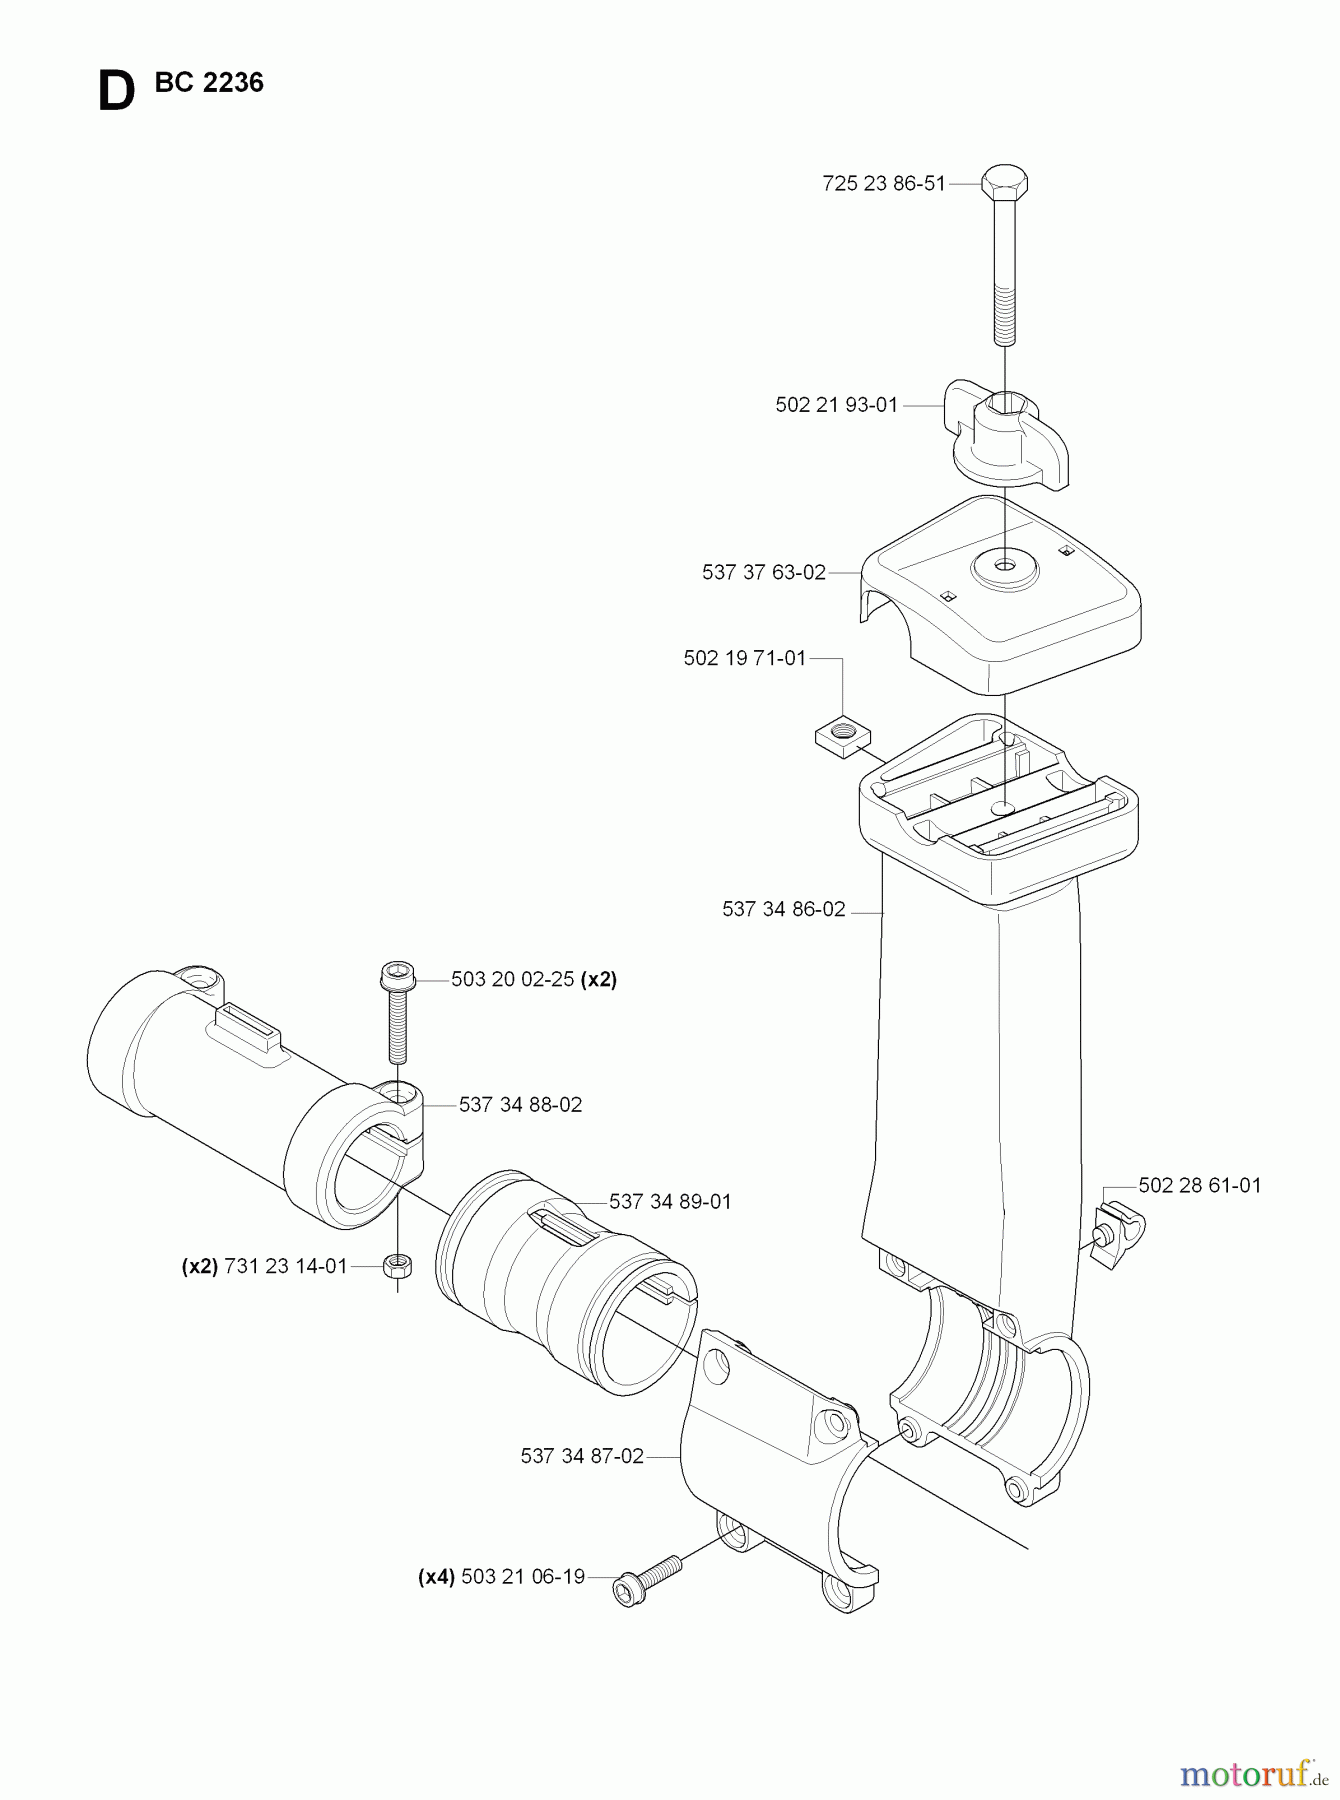  Jonsered Motorsensen, Trimmer BC2236 - Jonsered Brushcutter (2008-09) TOWER